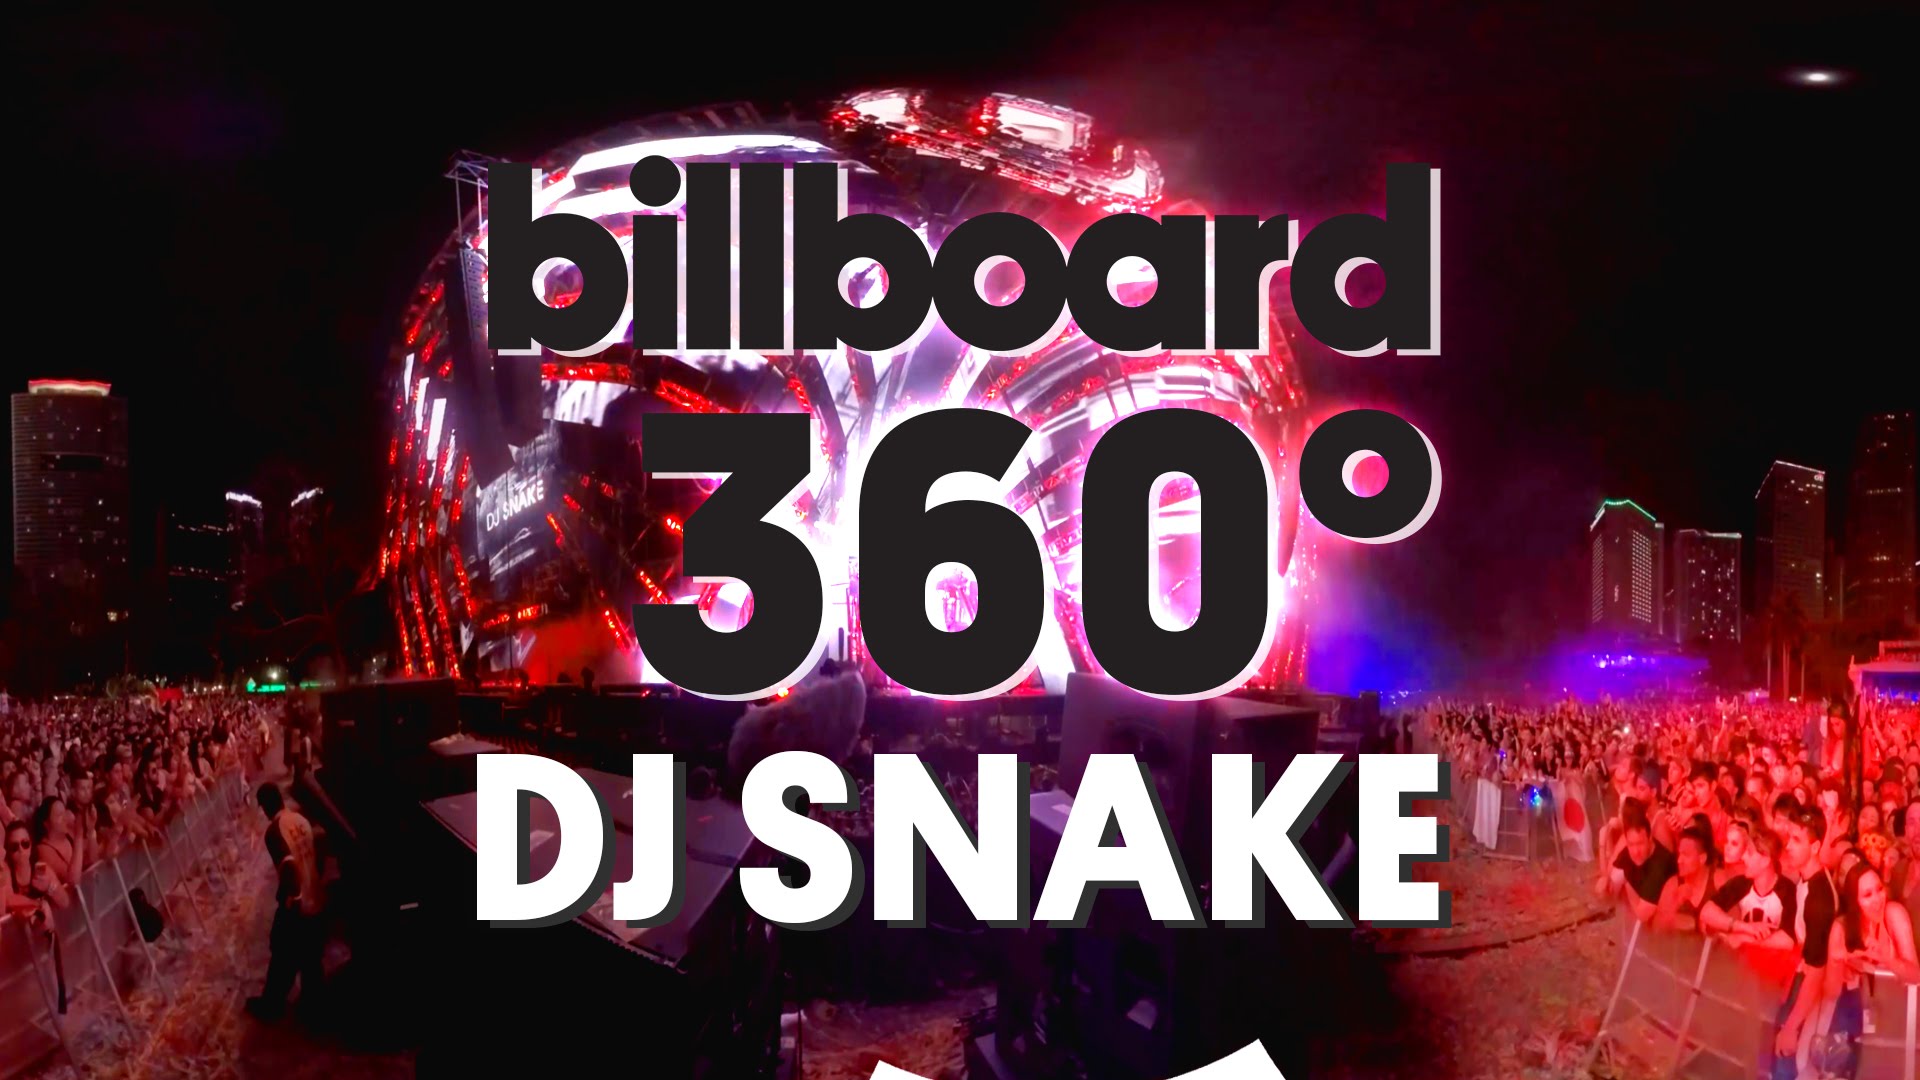 DJ Snake drops “Propaganda” live @ ULTRA 2016 | 360 VIDEO VR experience